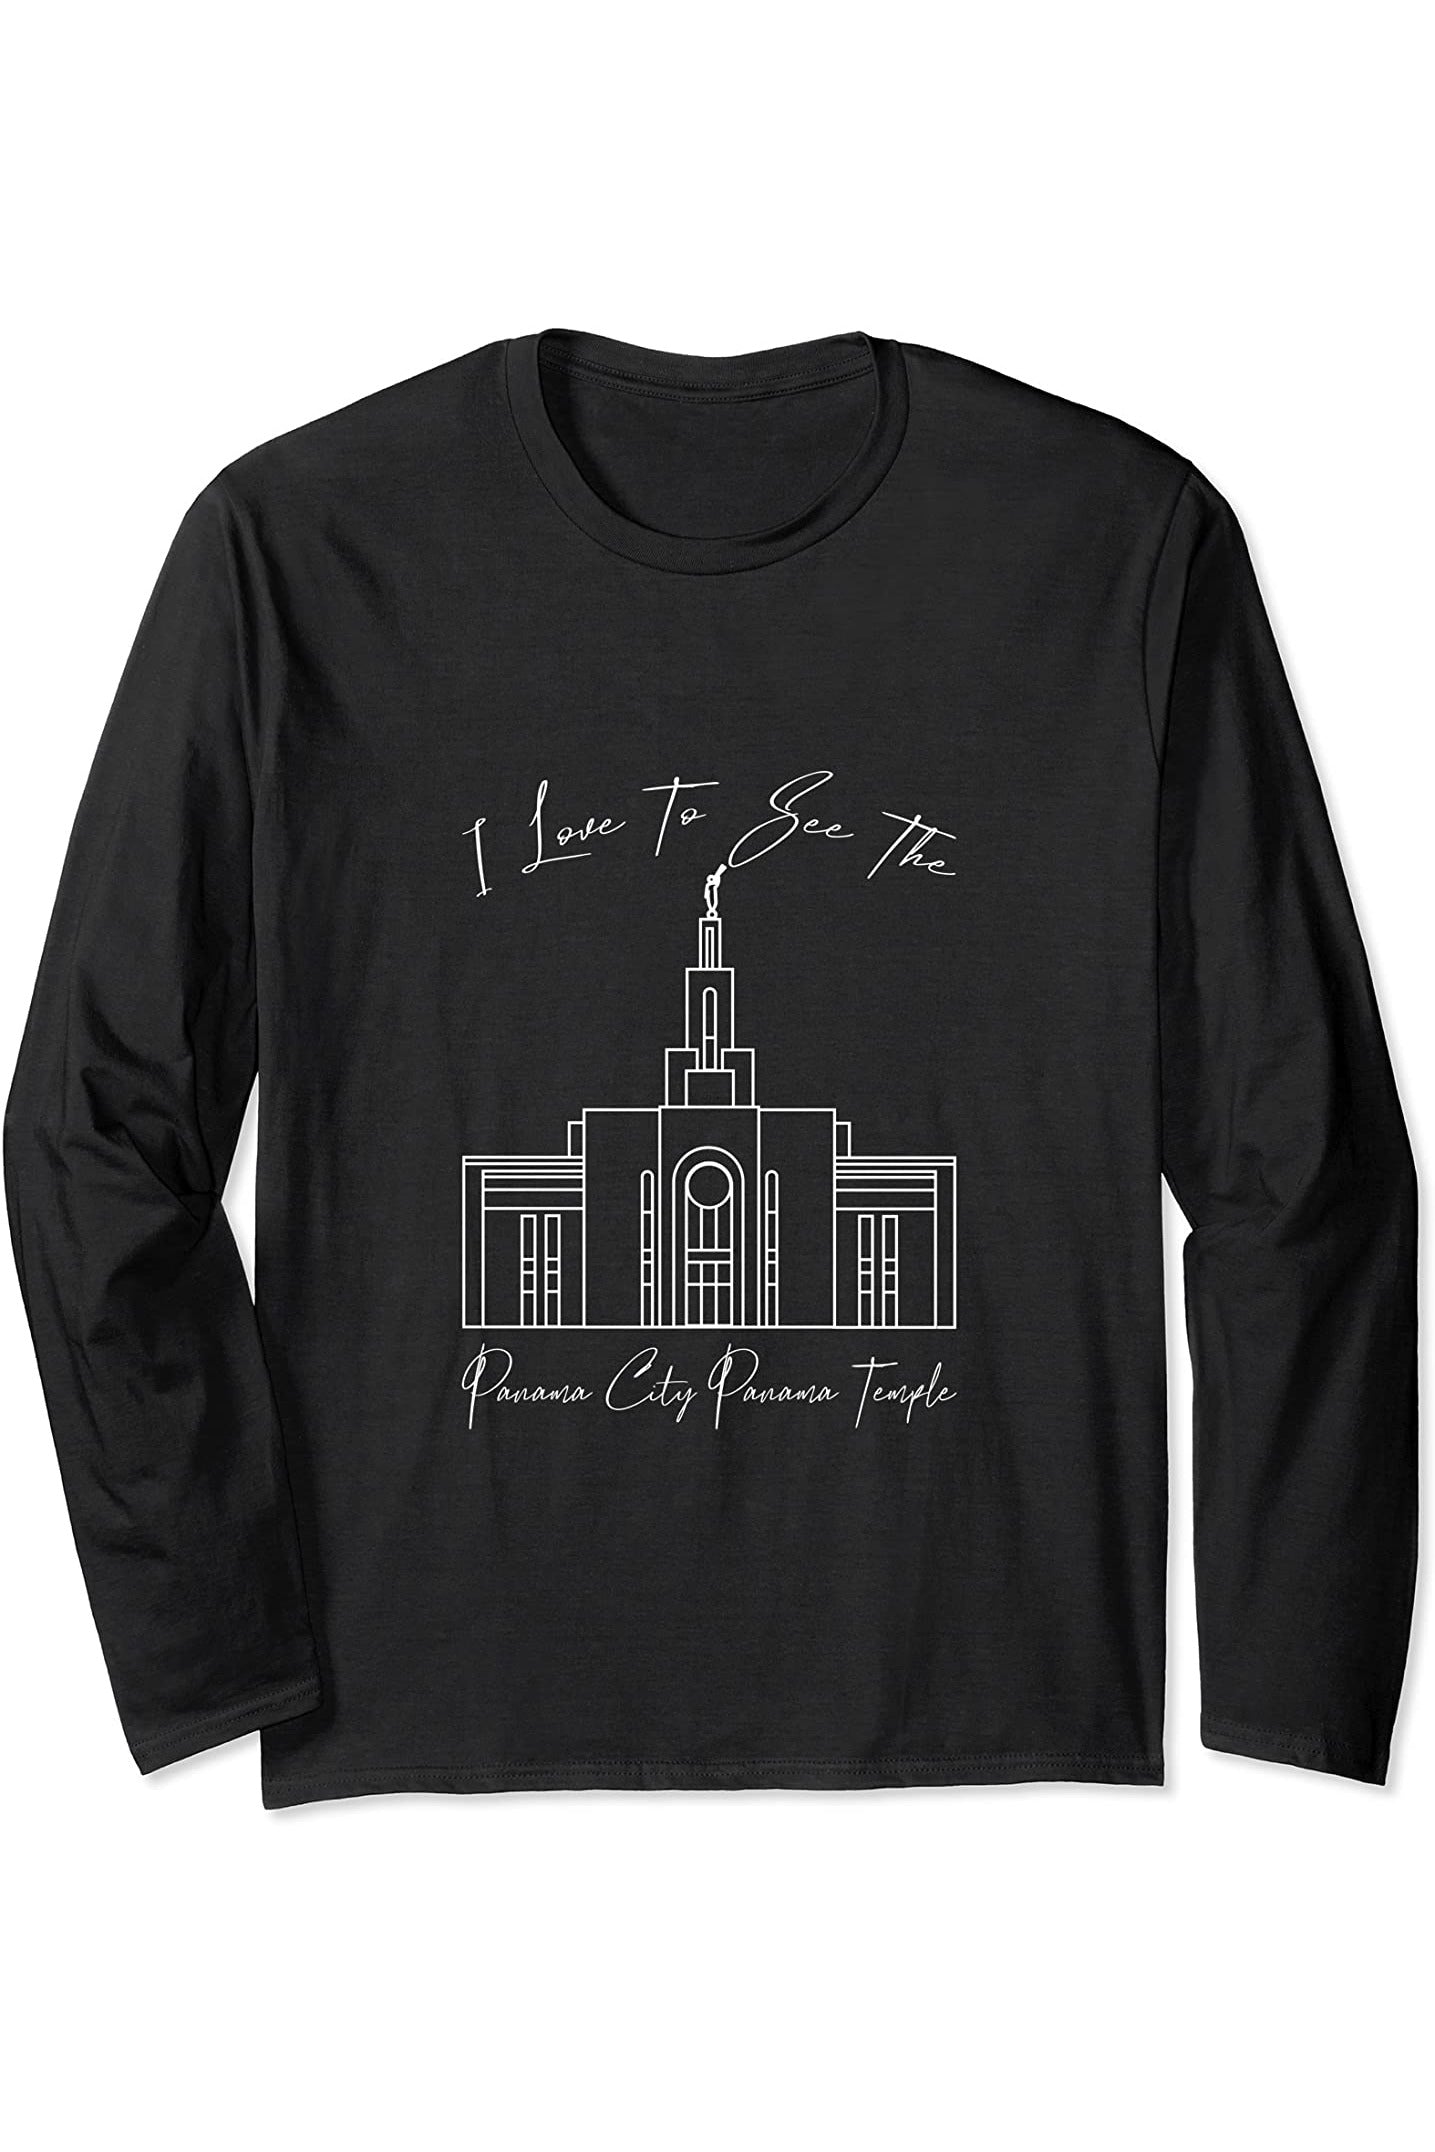 Panama City Panama Temple Long Sleeve T-Shirt - Calligraphy Style (English) US